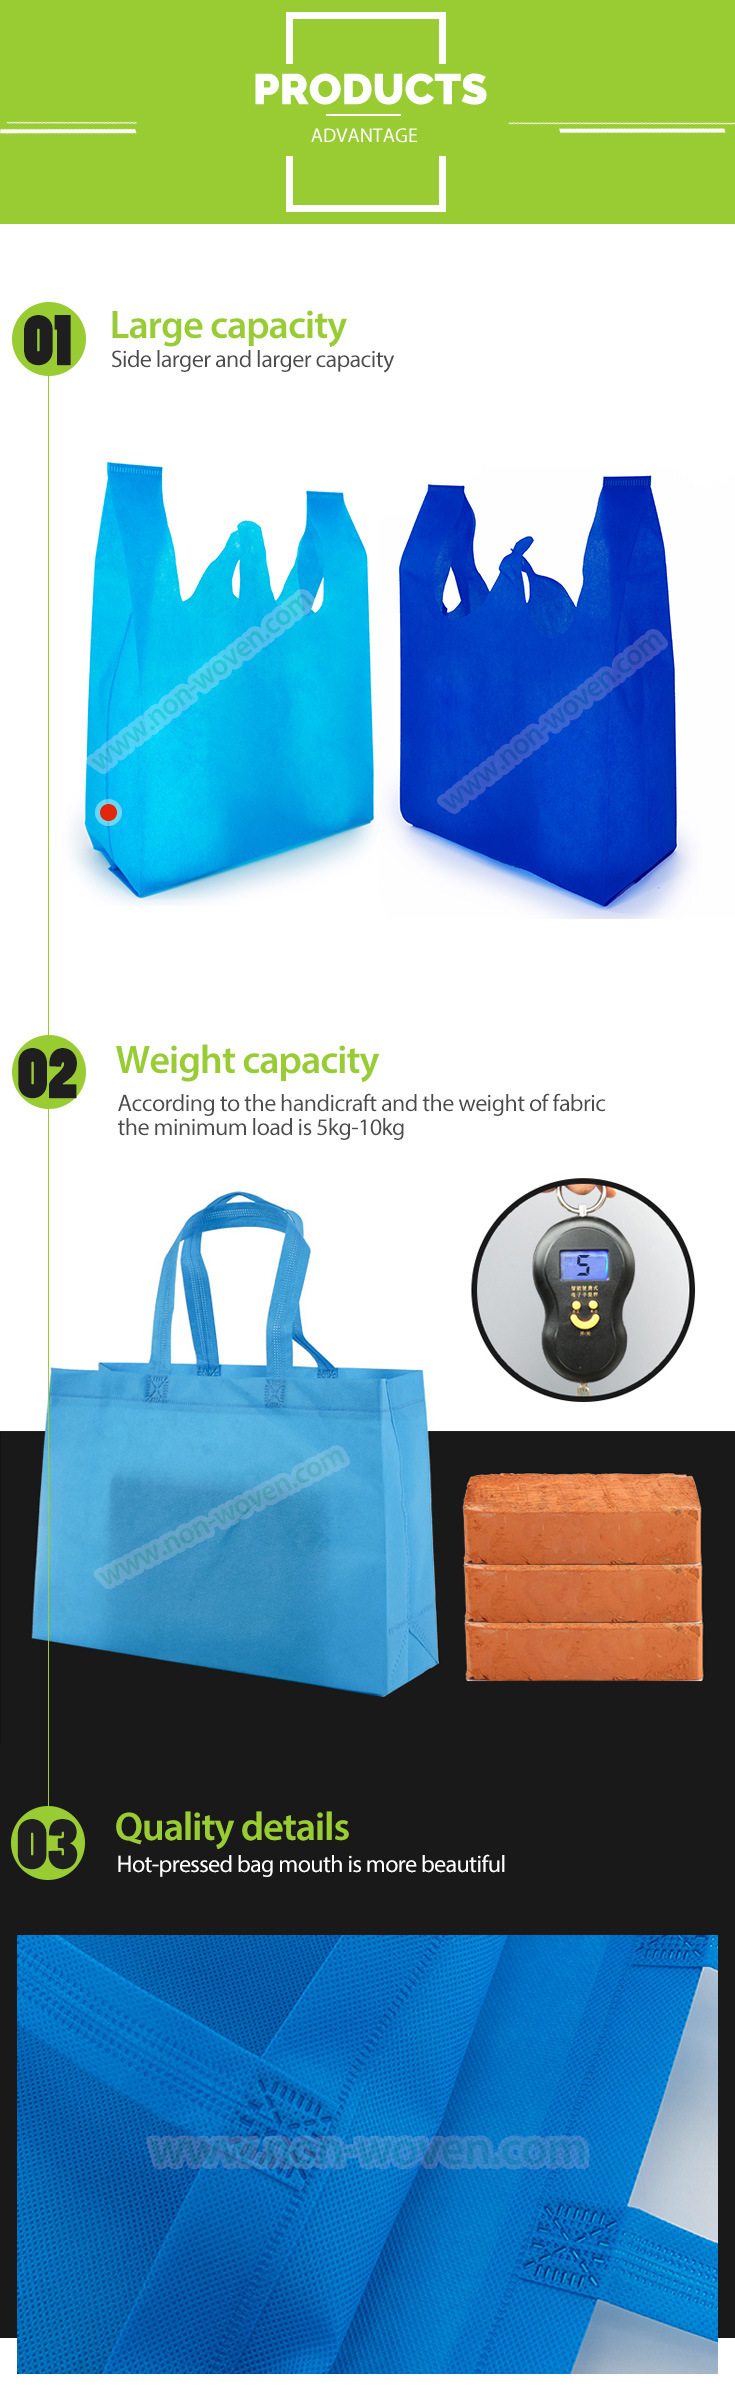 Promotional Tote Bag ,Shopping Bag,Non-Woven Bag,Tote Bag,Biodegradable Bag, Souvenir Bags, Promotional Bag,Drawstring Bag,,Recycle Bag,Reusable Bag,Grocery Bag